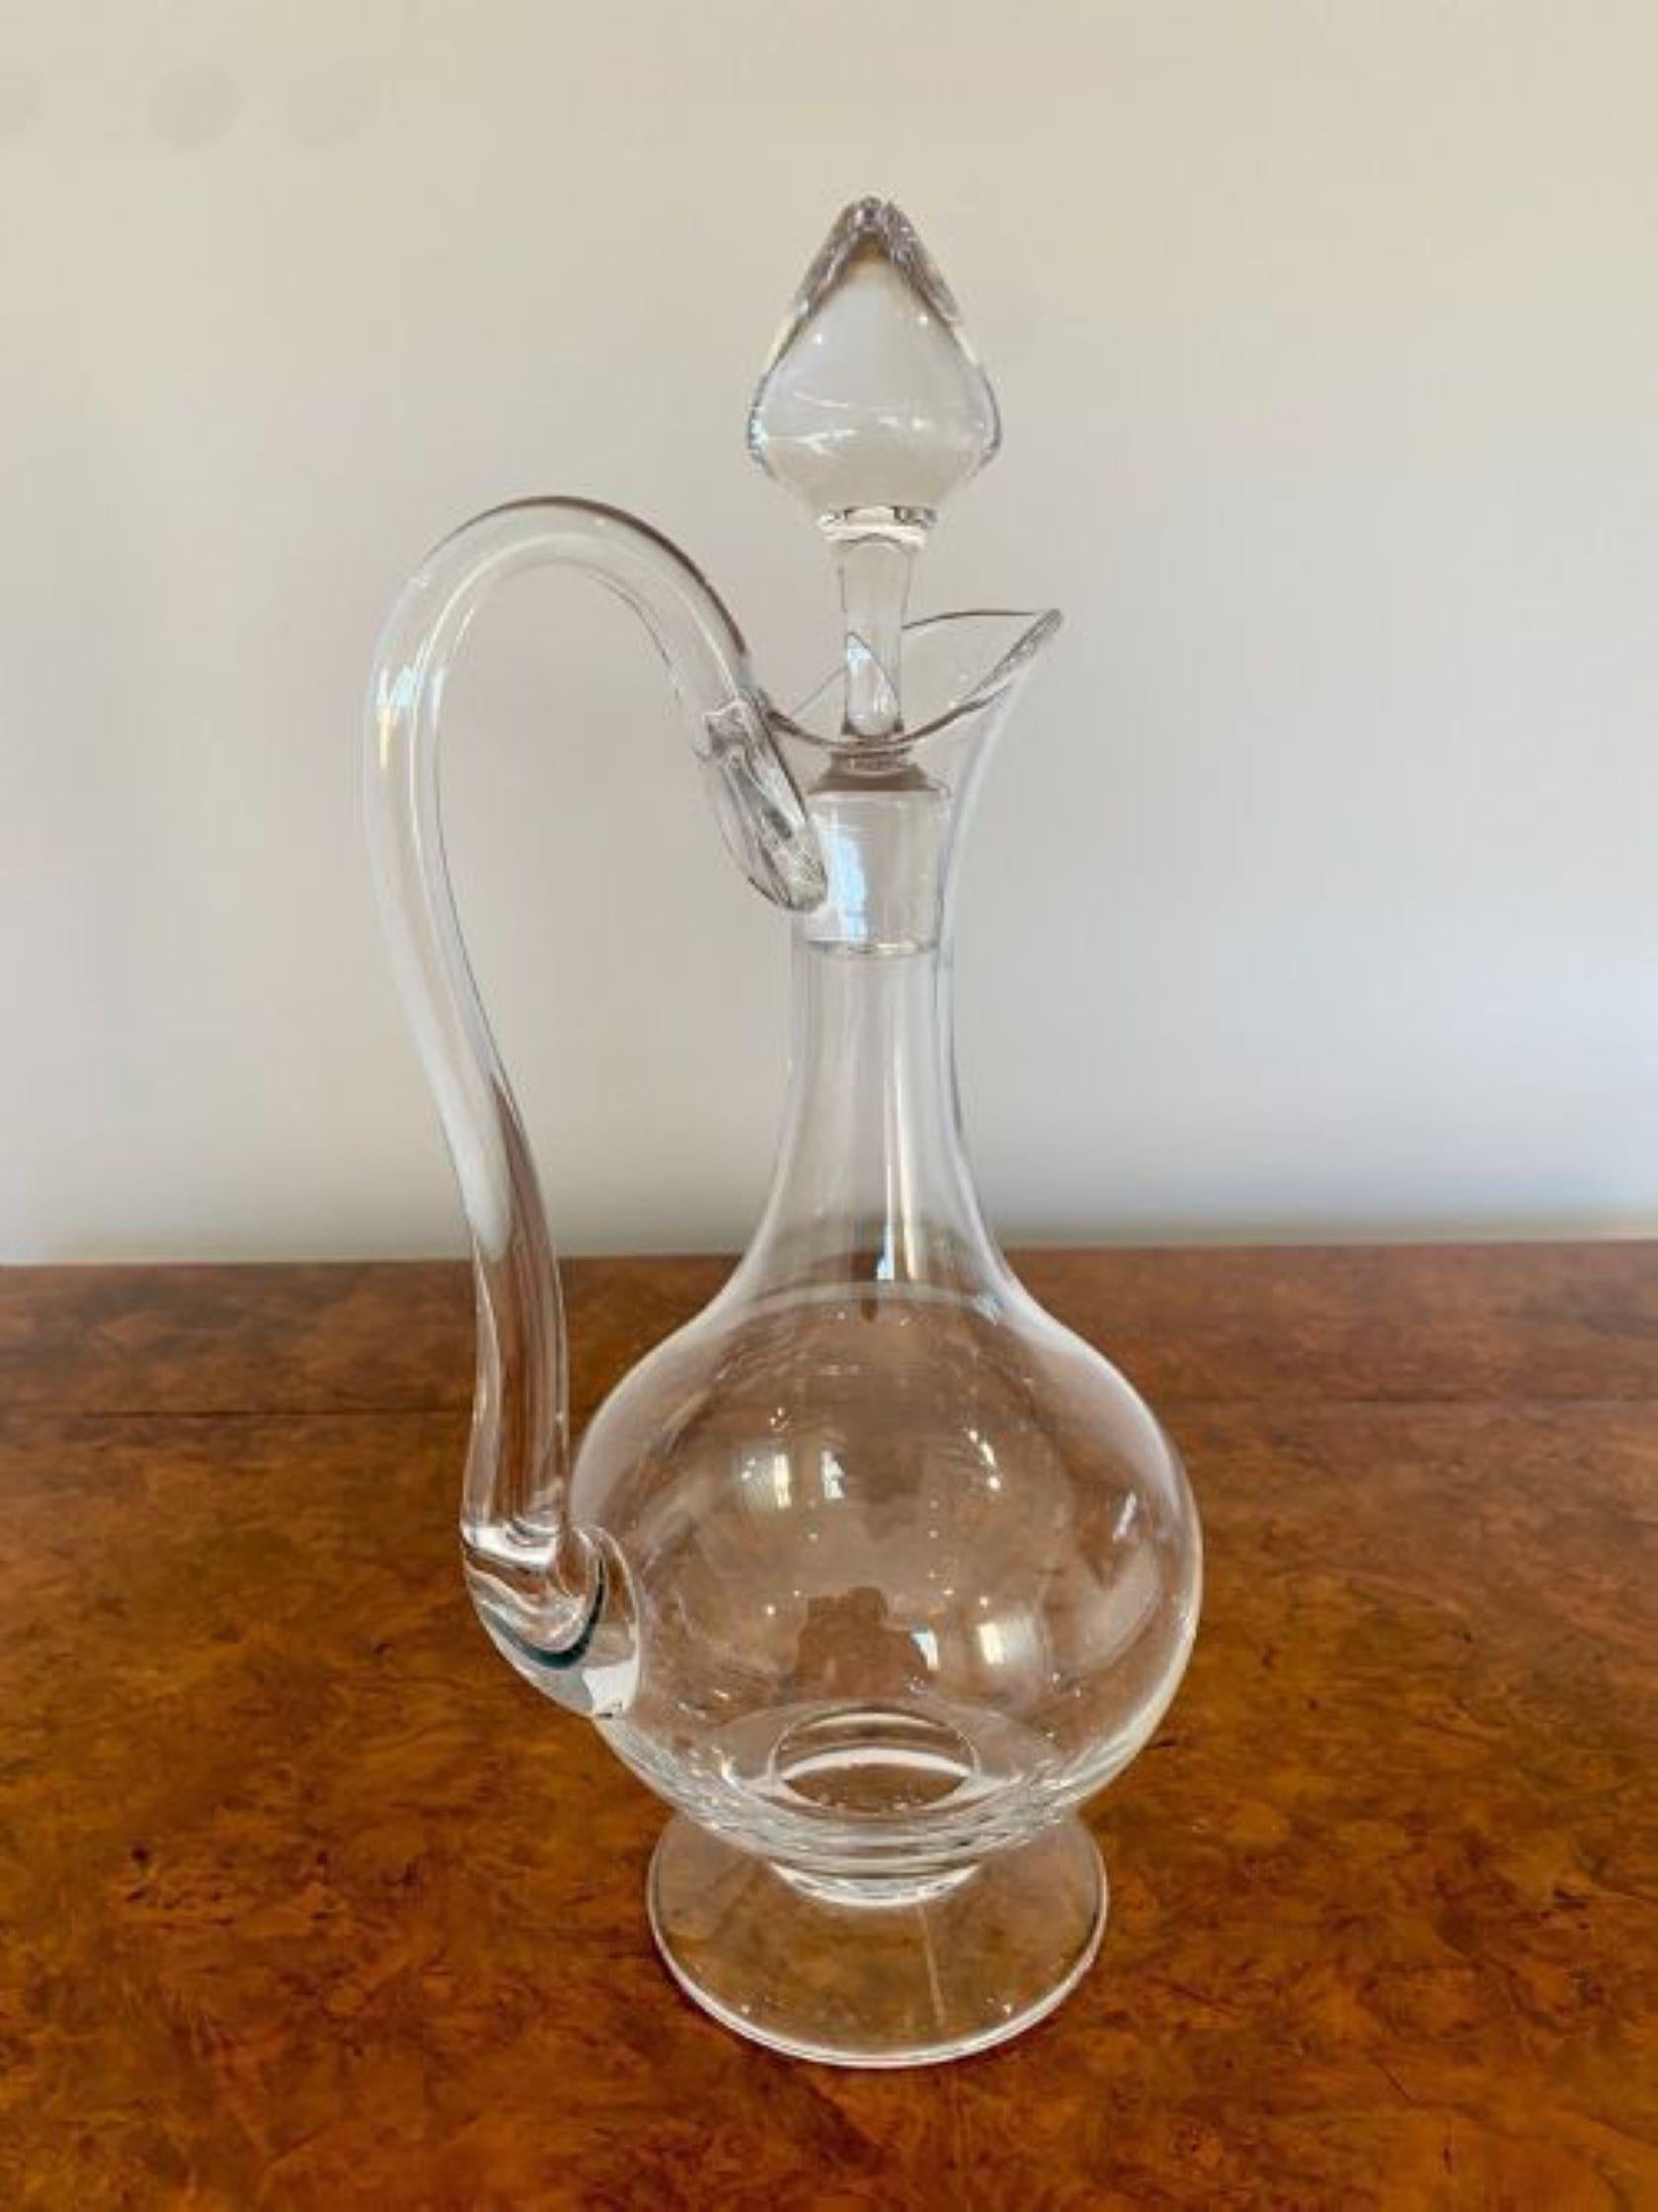 Antique Edwardian quality glass decanter, having a quality shaped glass decanter with a shaped handle and original glass stopper. 